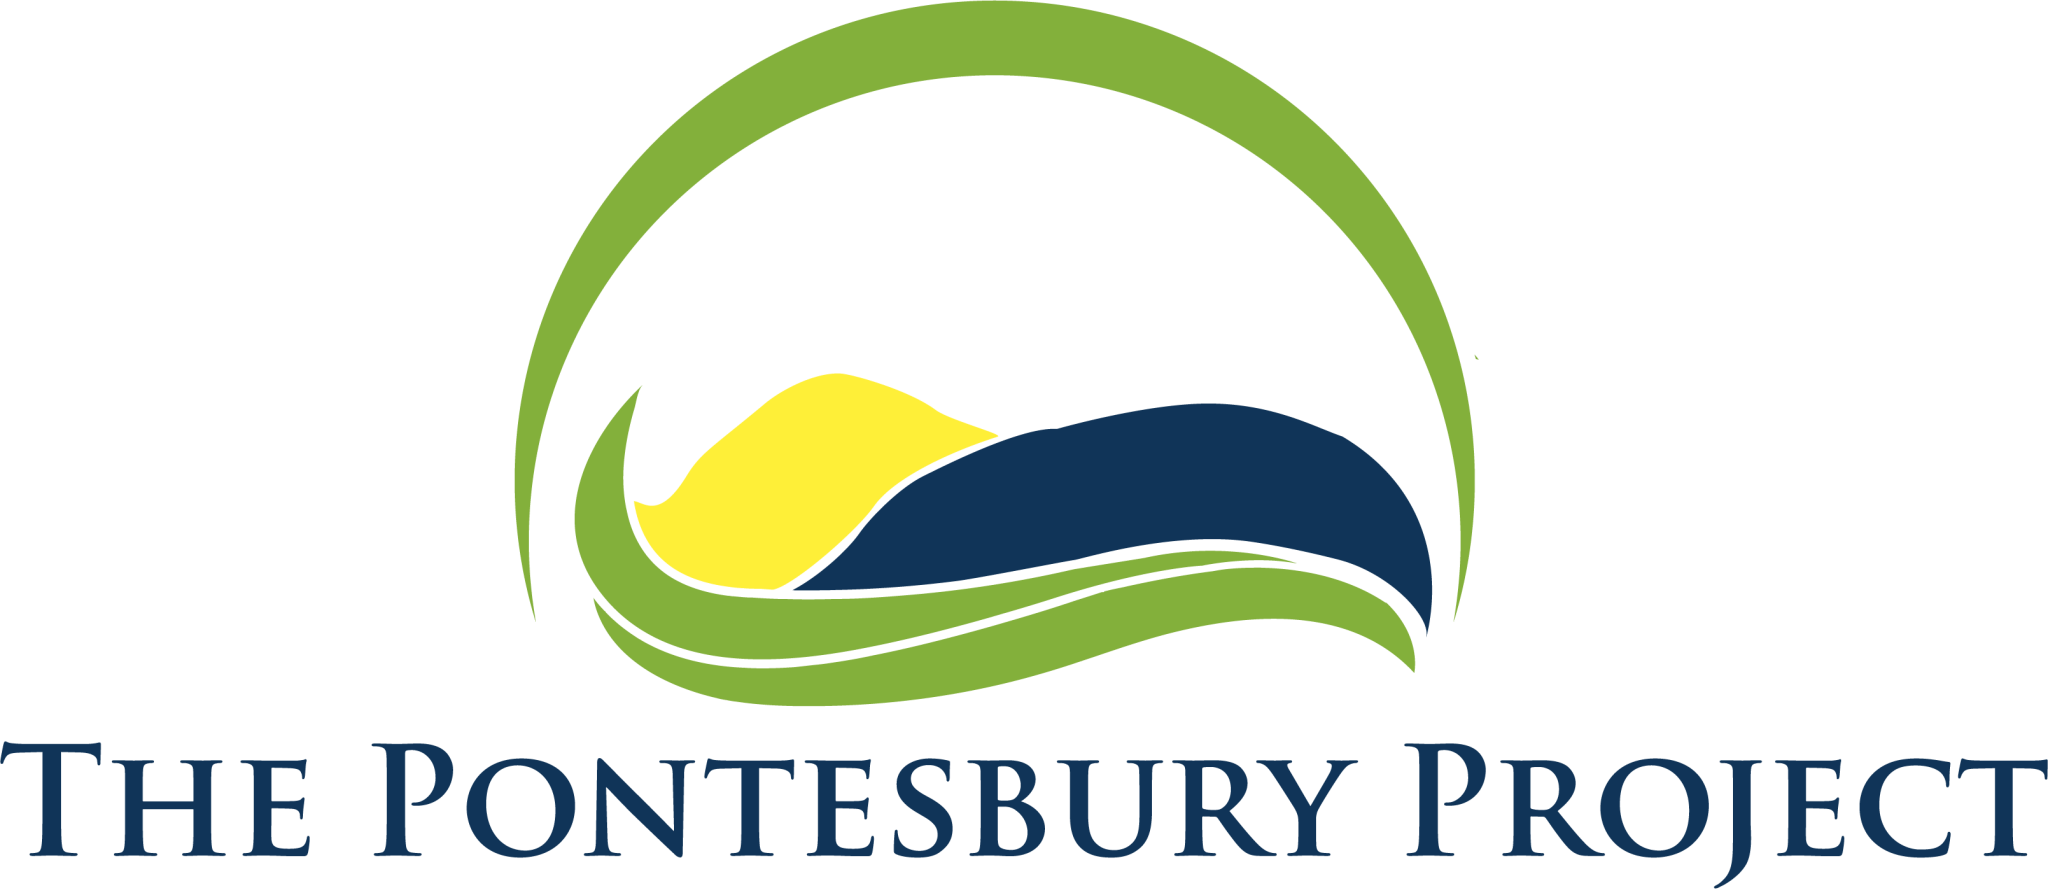 The Pontesbury logo